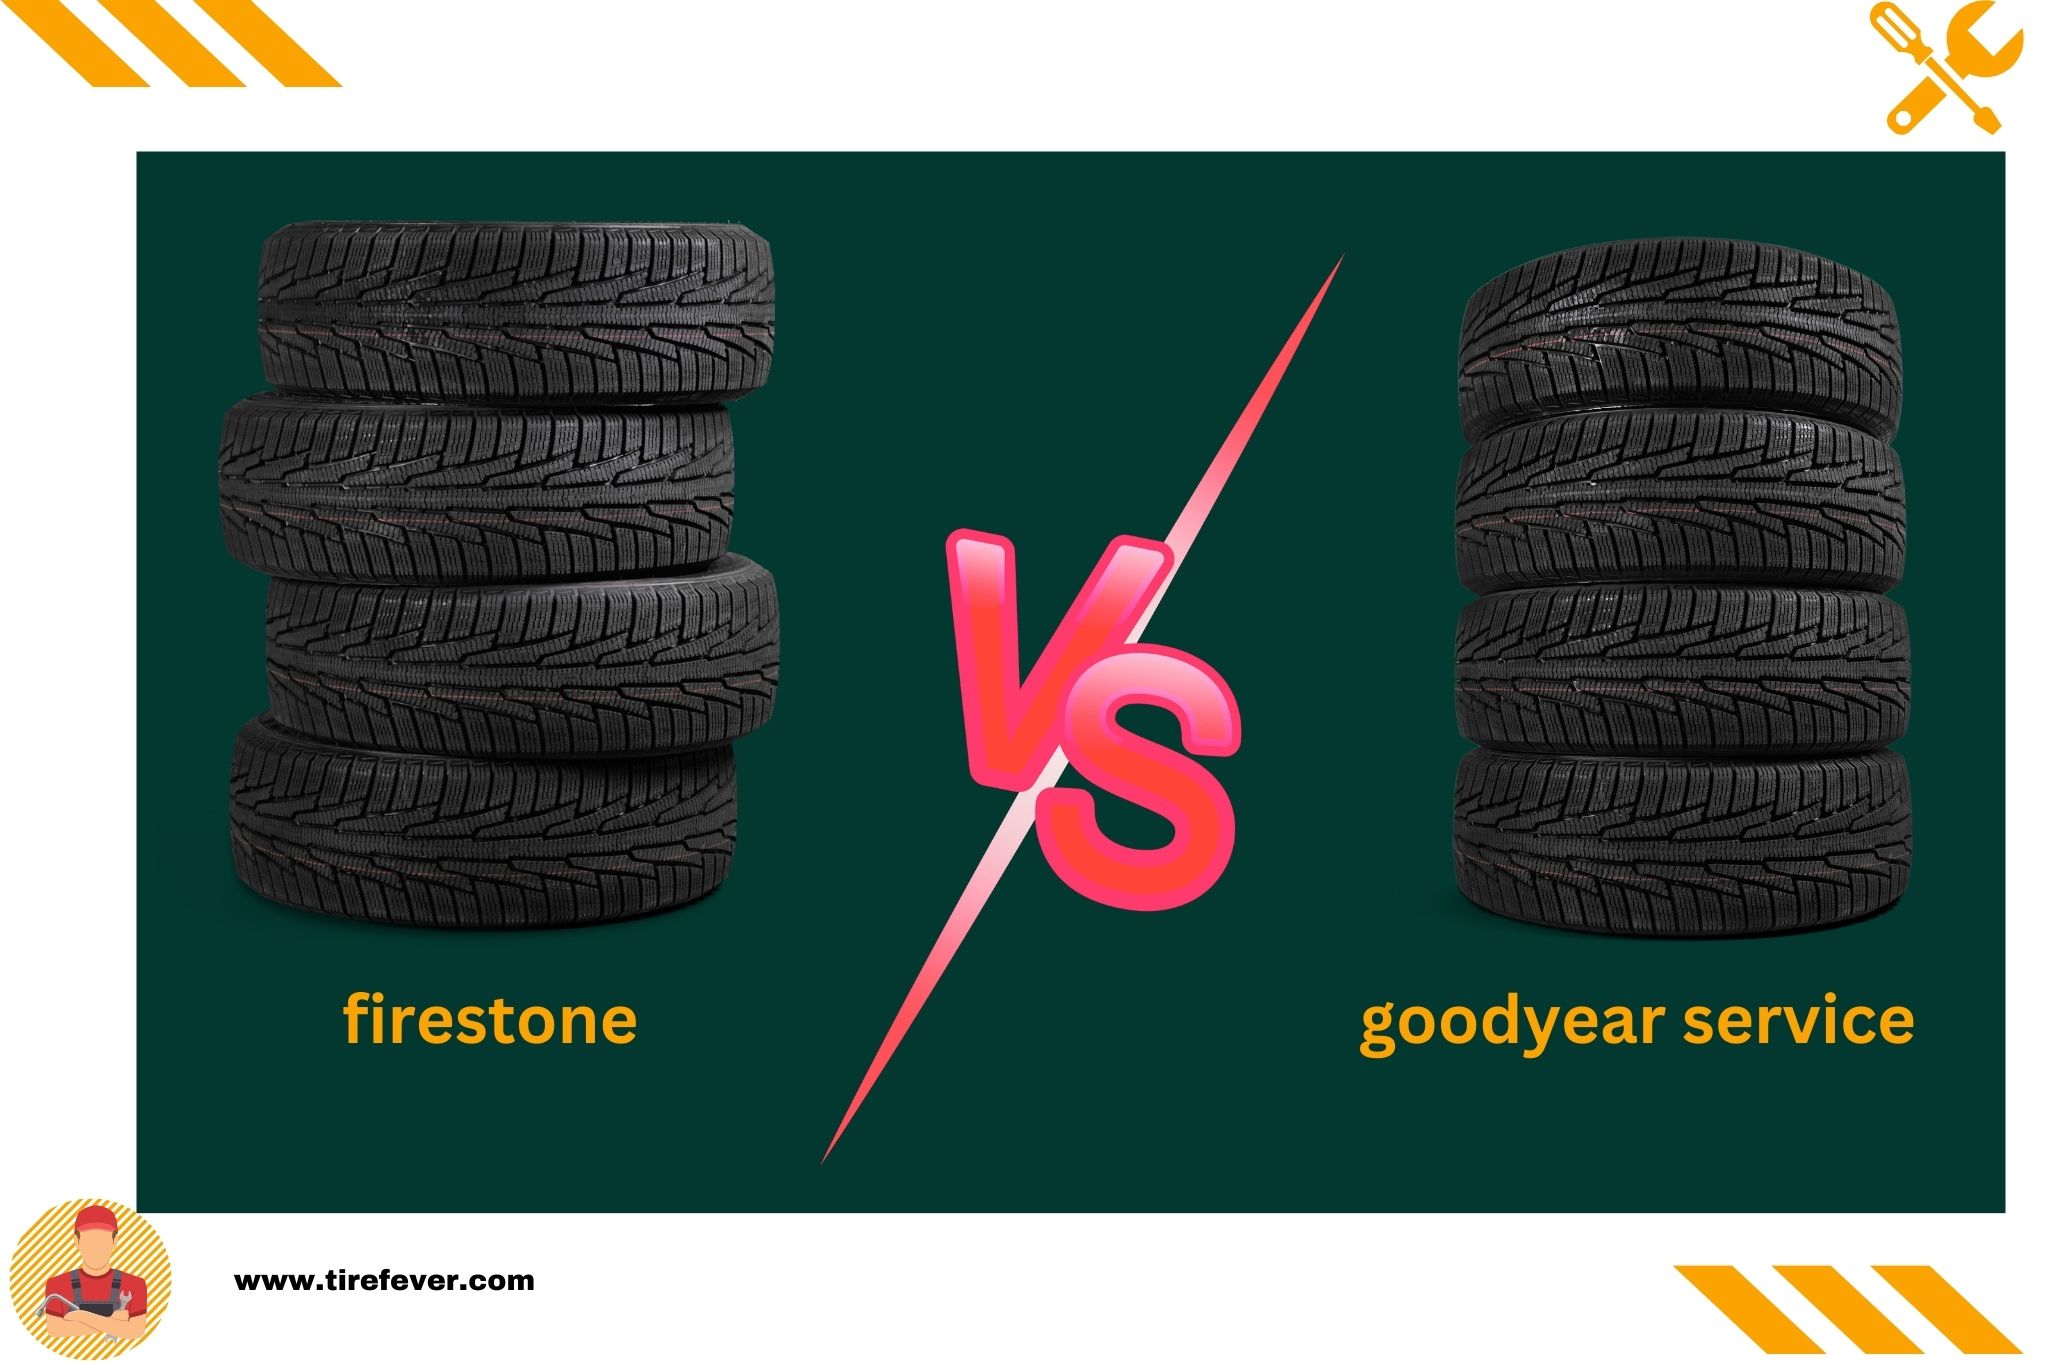 firestone vs goodyear service